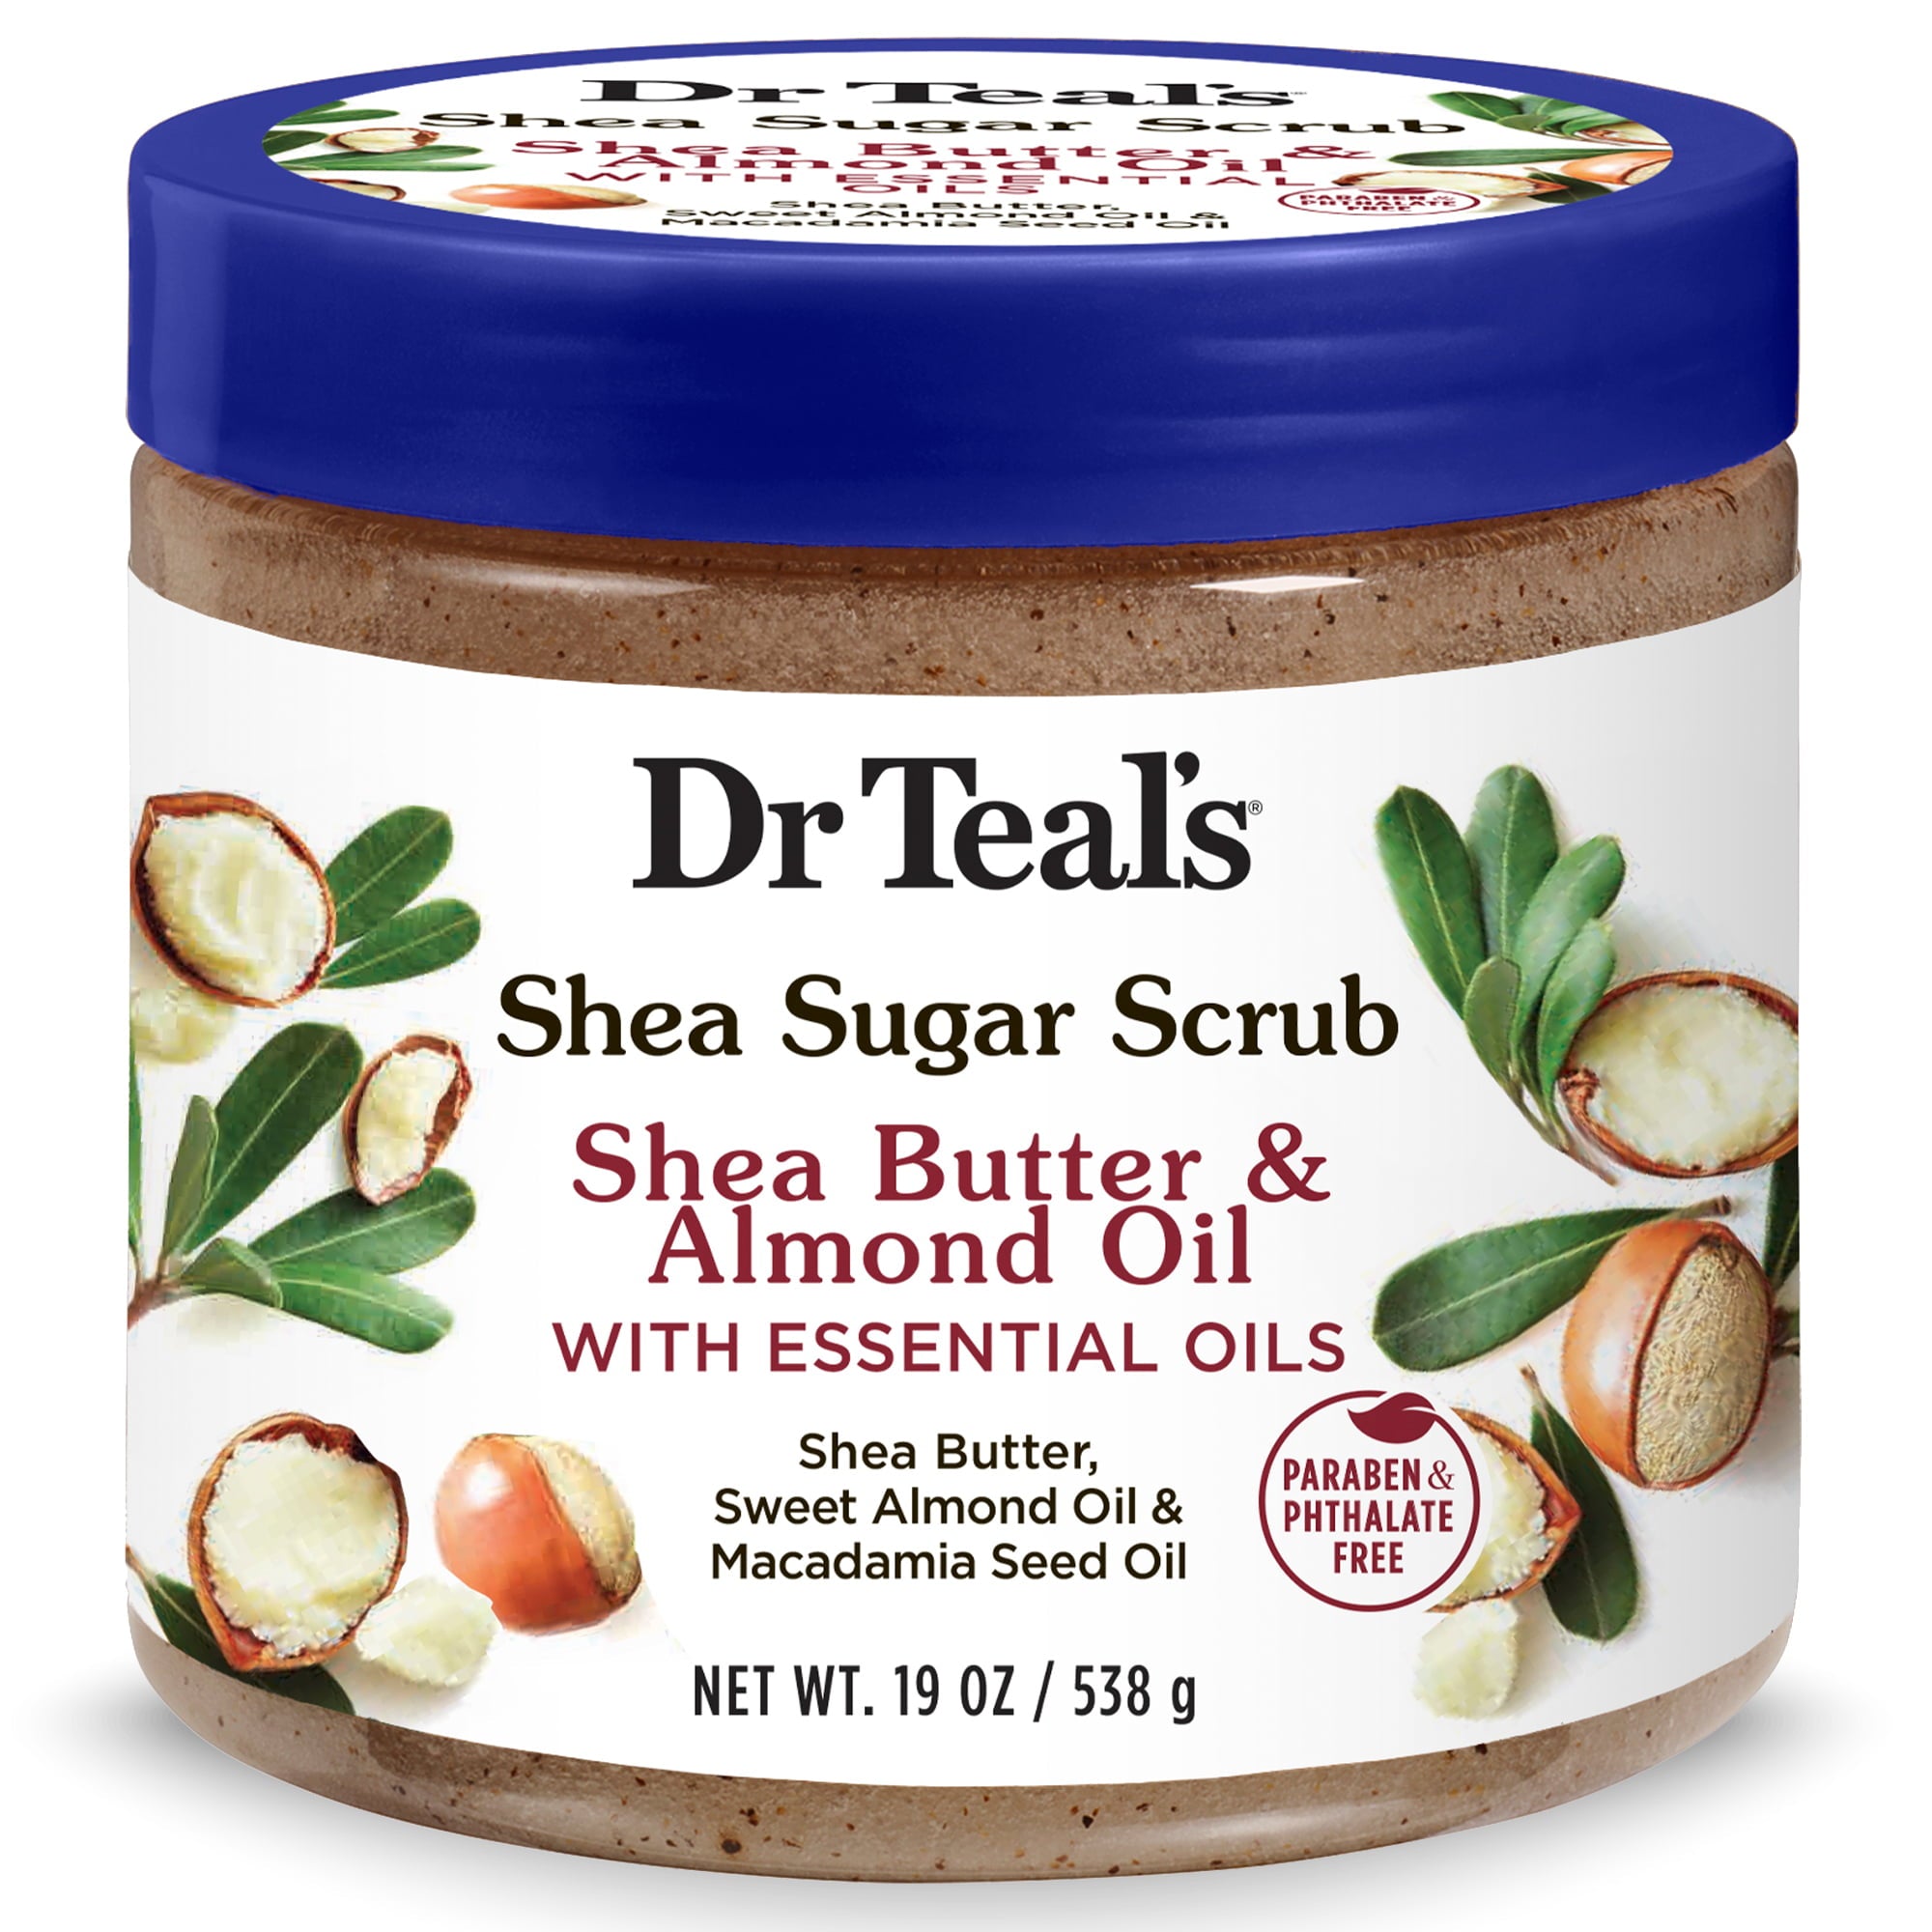 Dr Teal's Shea Sugar Scrub Shea Butter & Almond Oil with Essential Oils 19oz